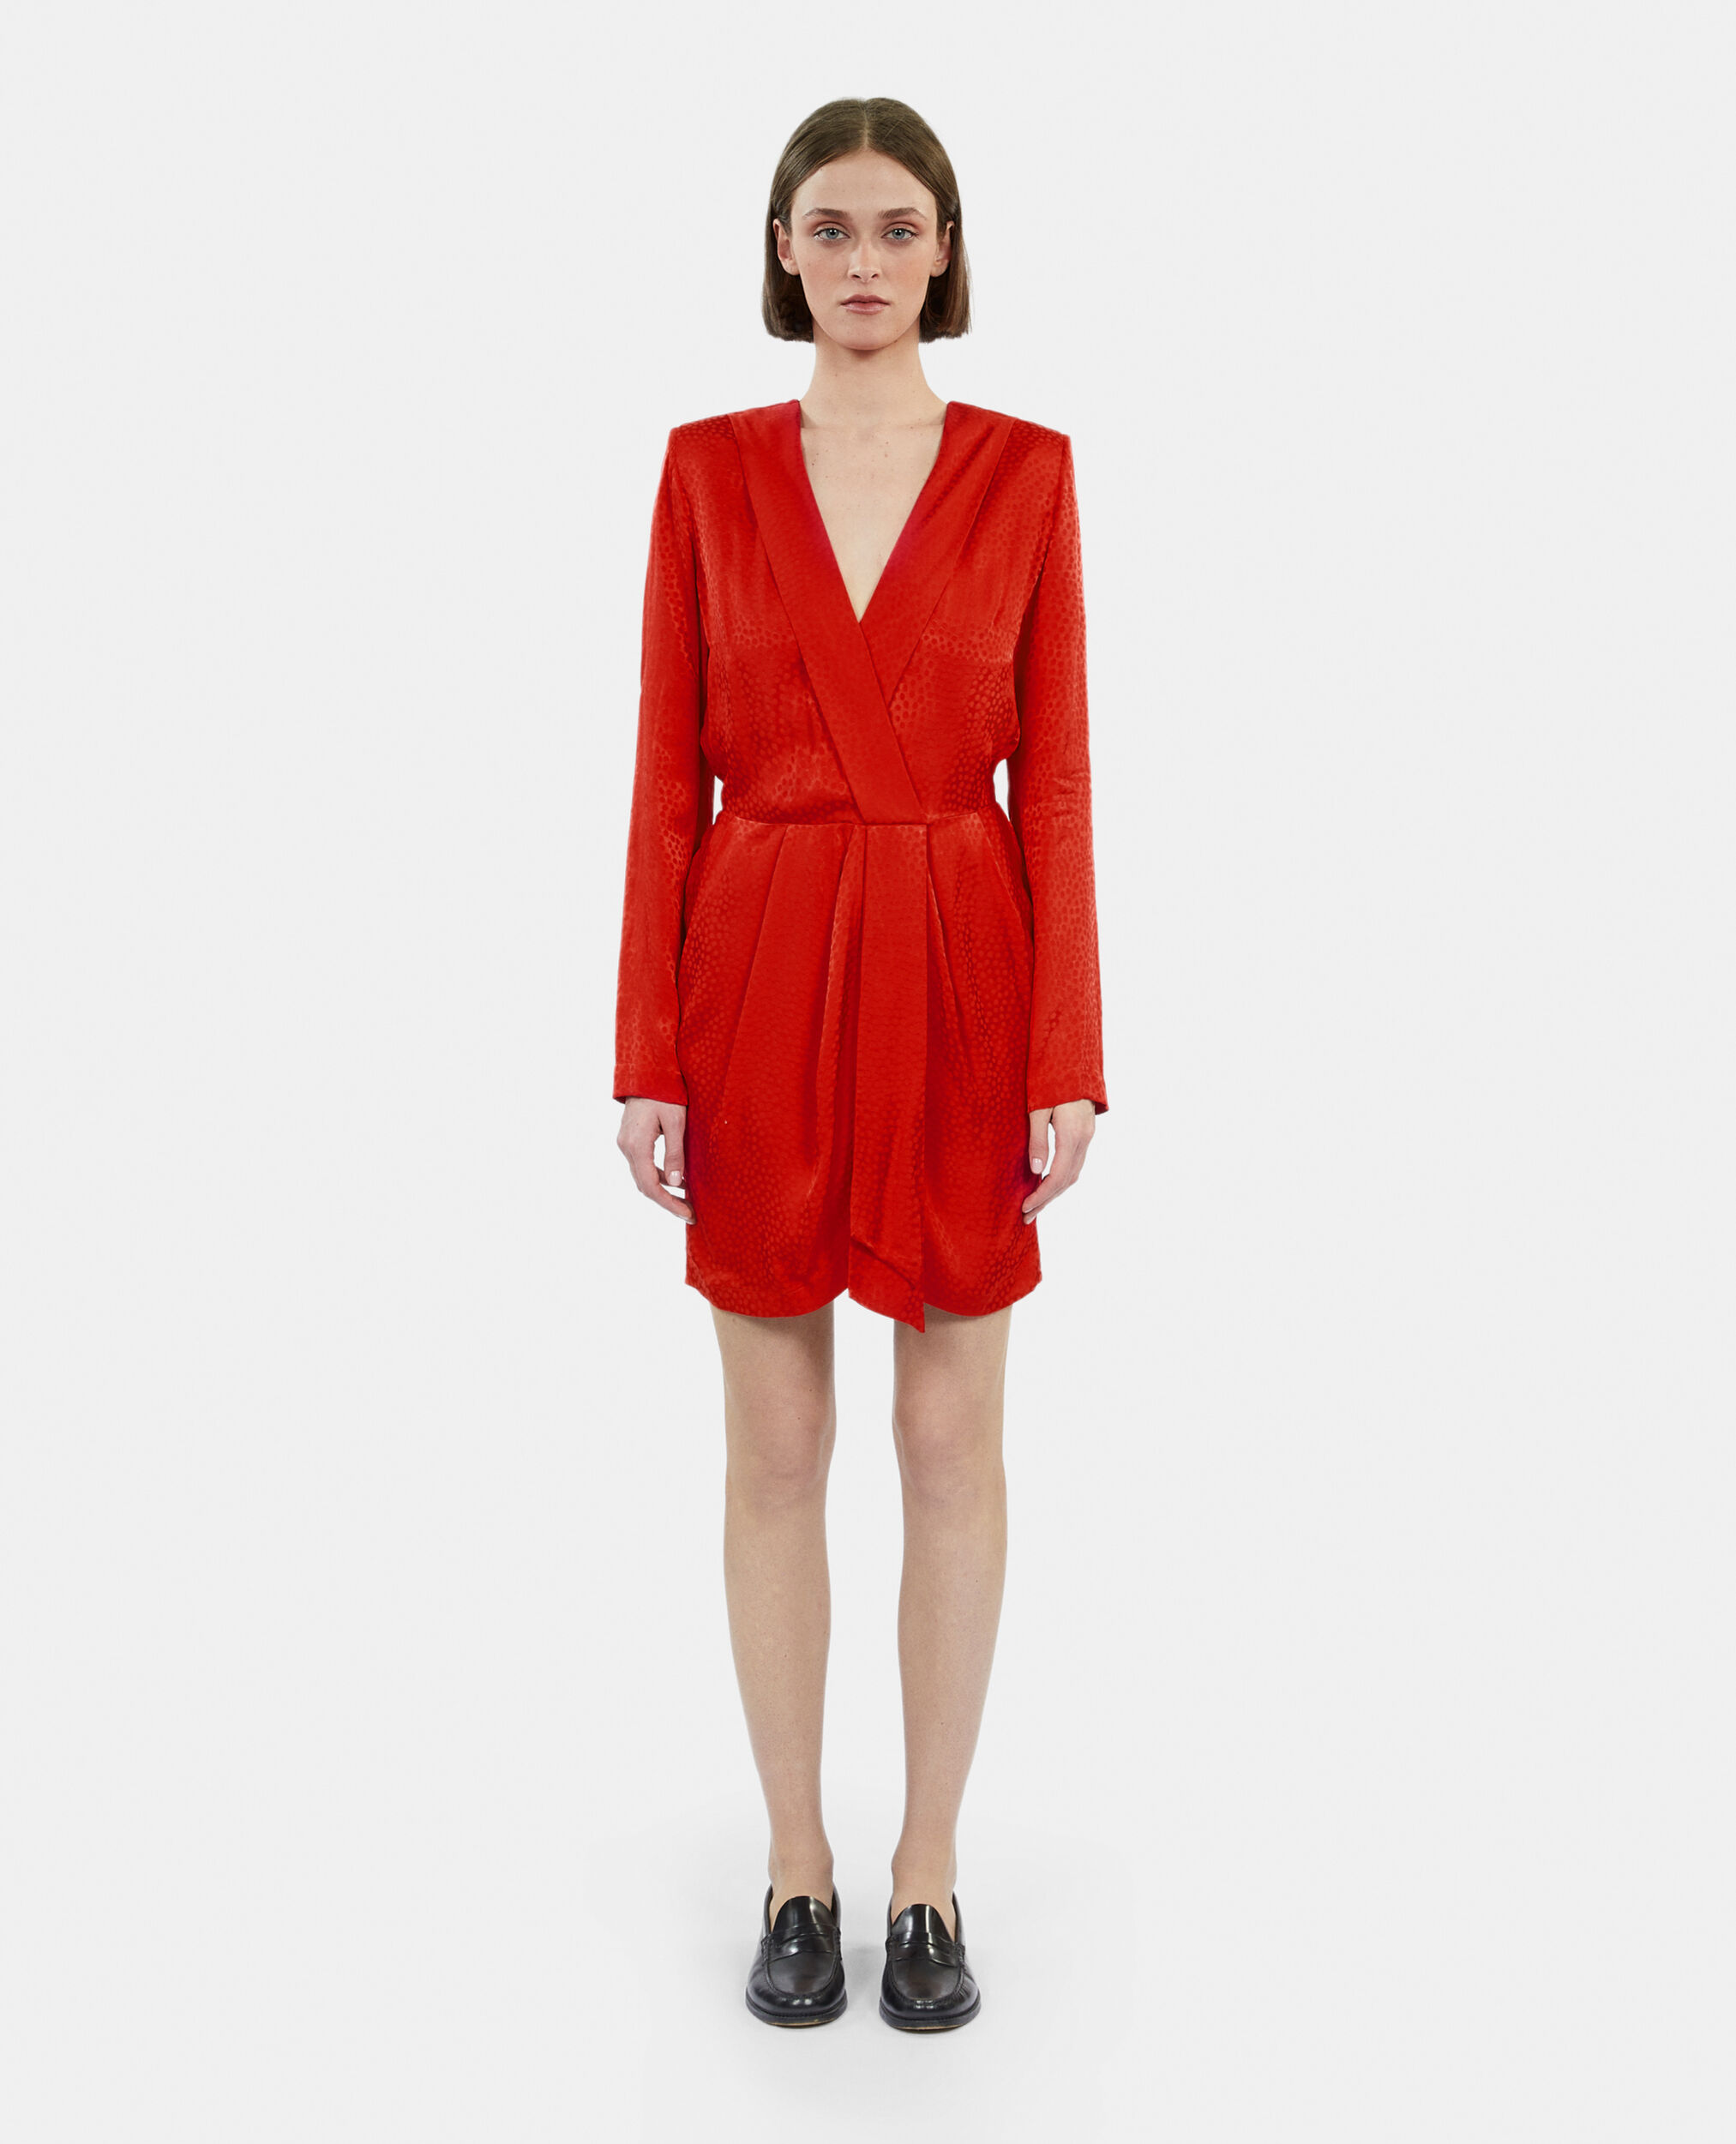 Vestido corto rojo lunares jacquard, ORIENTAL RED, hi-res image number null